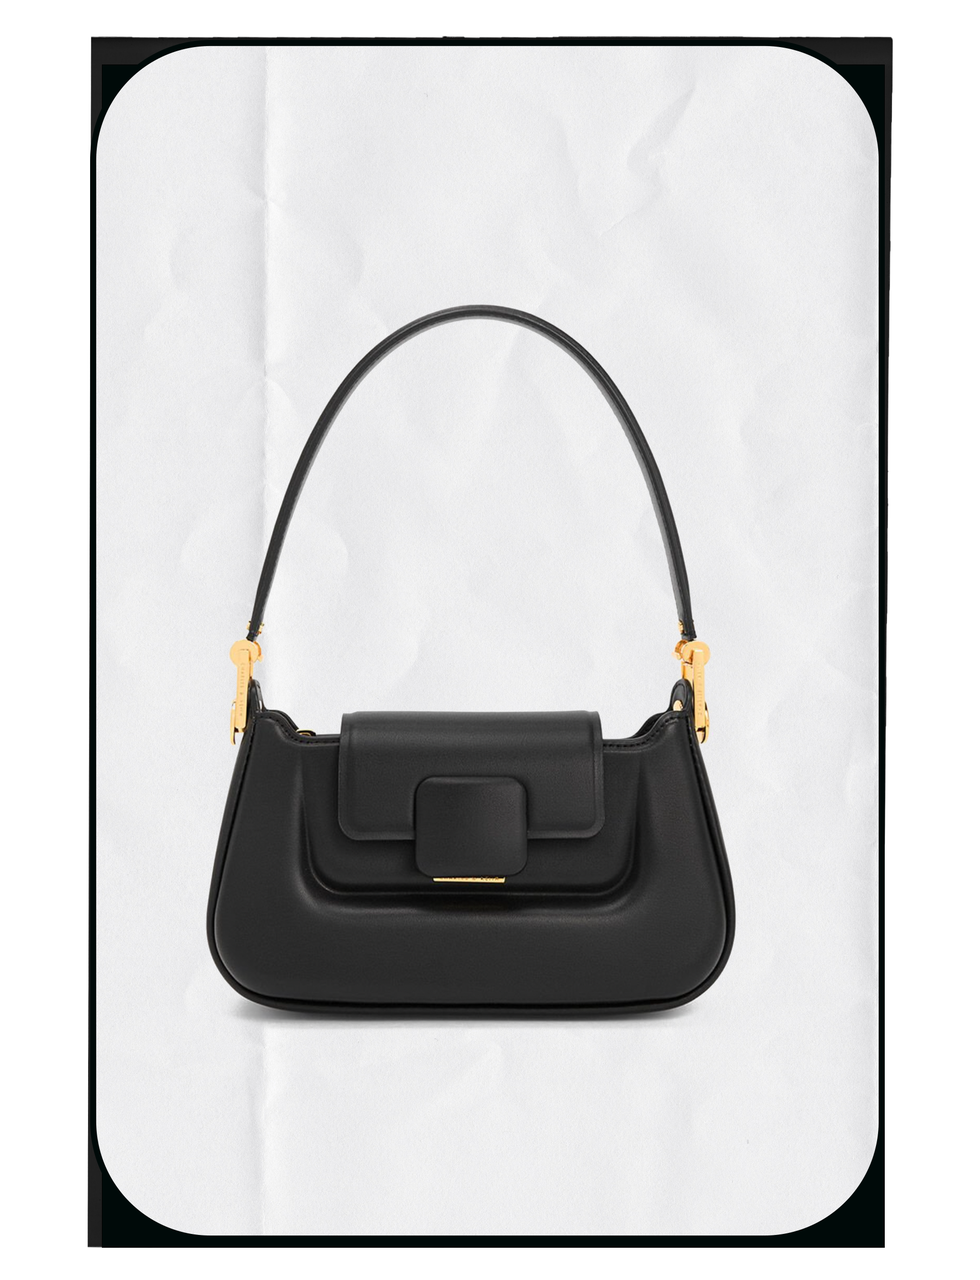 Best Handbags for Fall 2021 -- Shop the Trending Styles